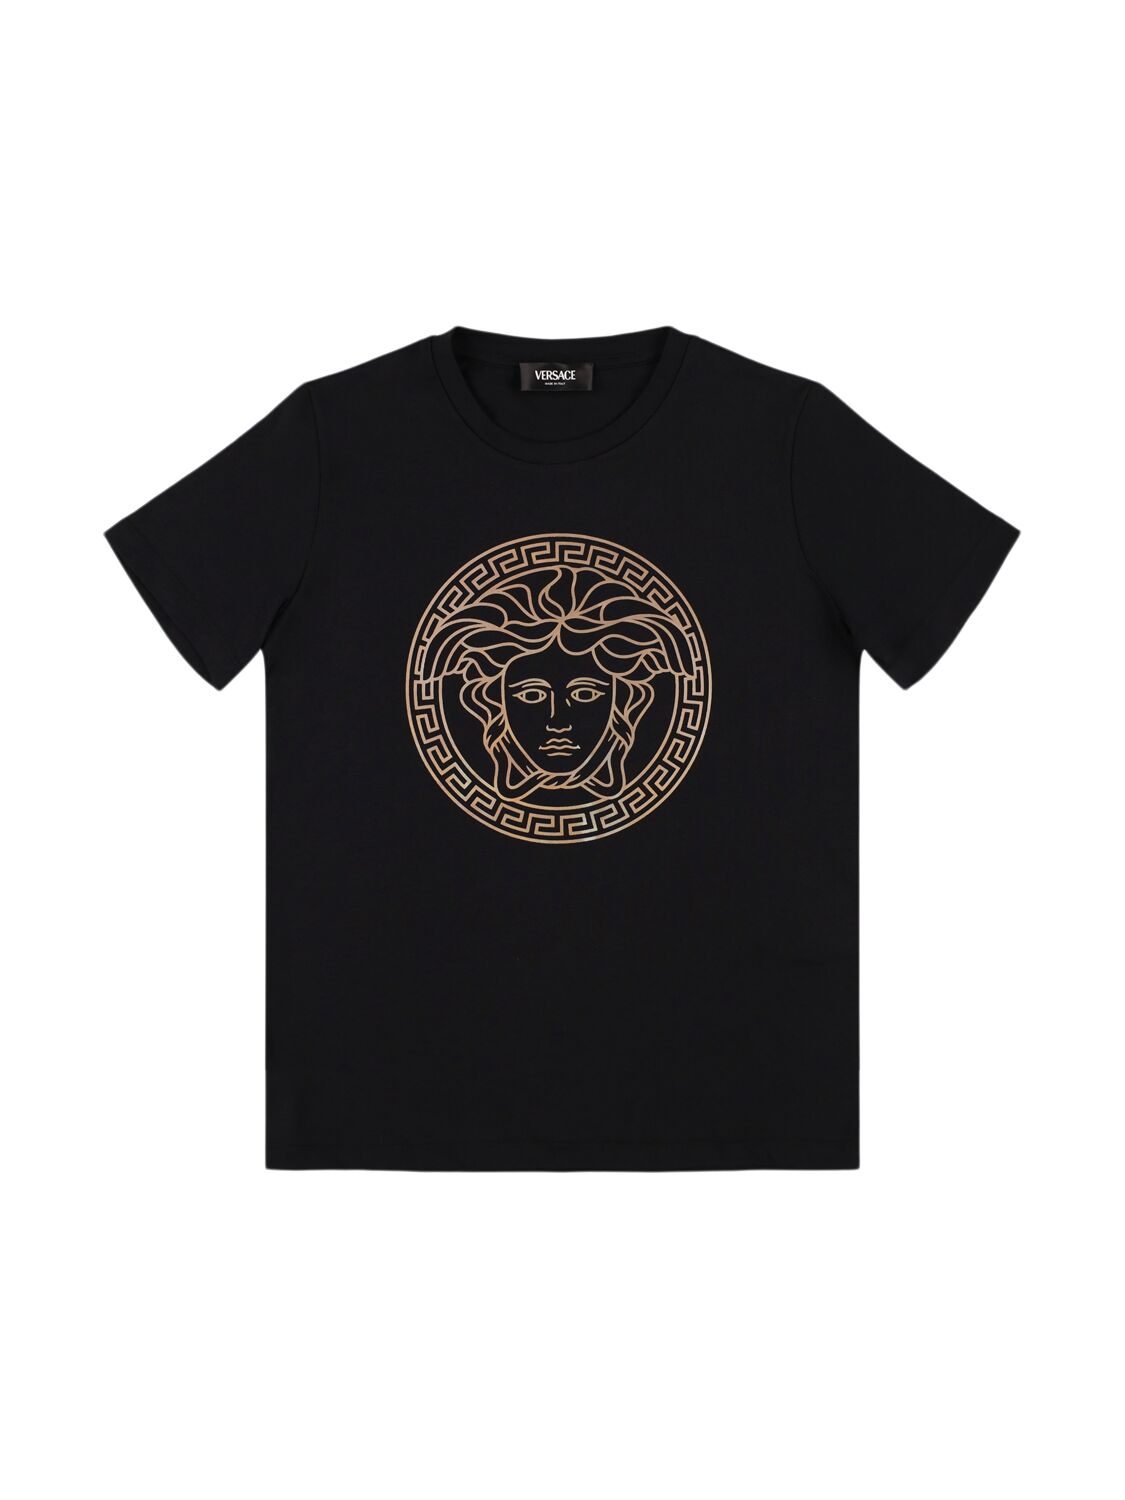 Versace Printed Logo Cotton Jersey T-shirt In Black